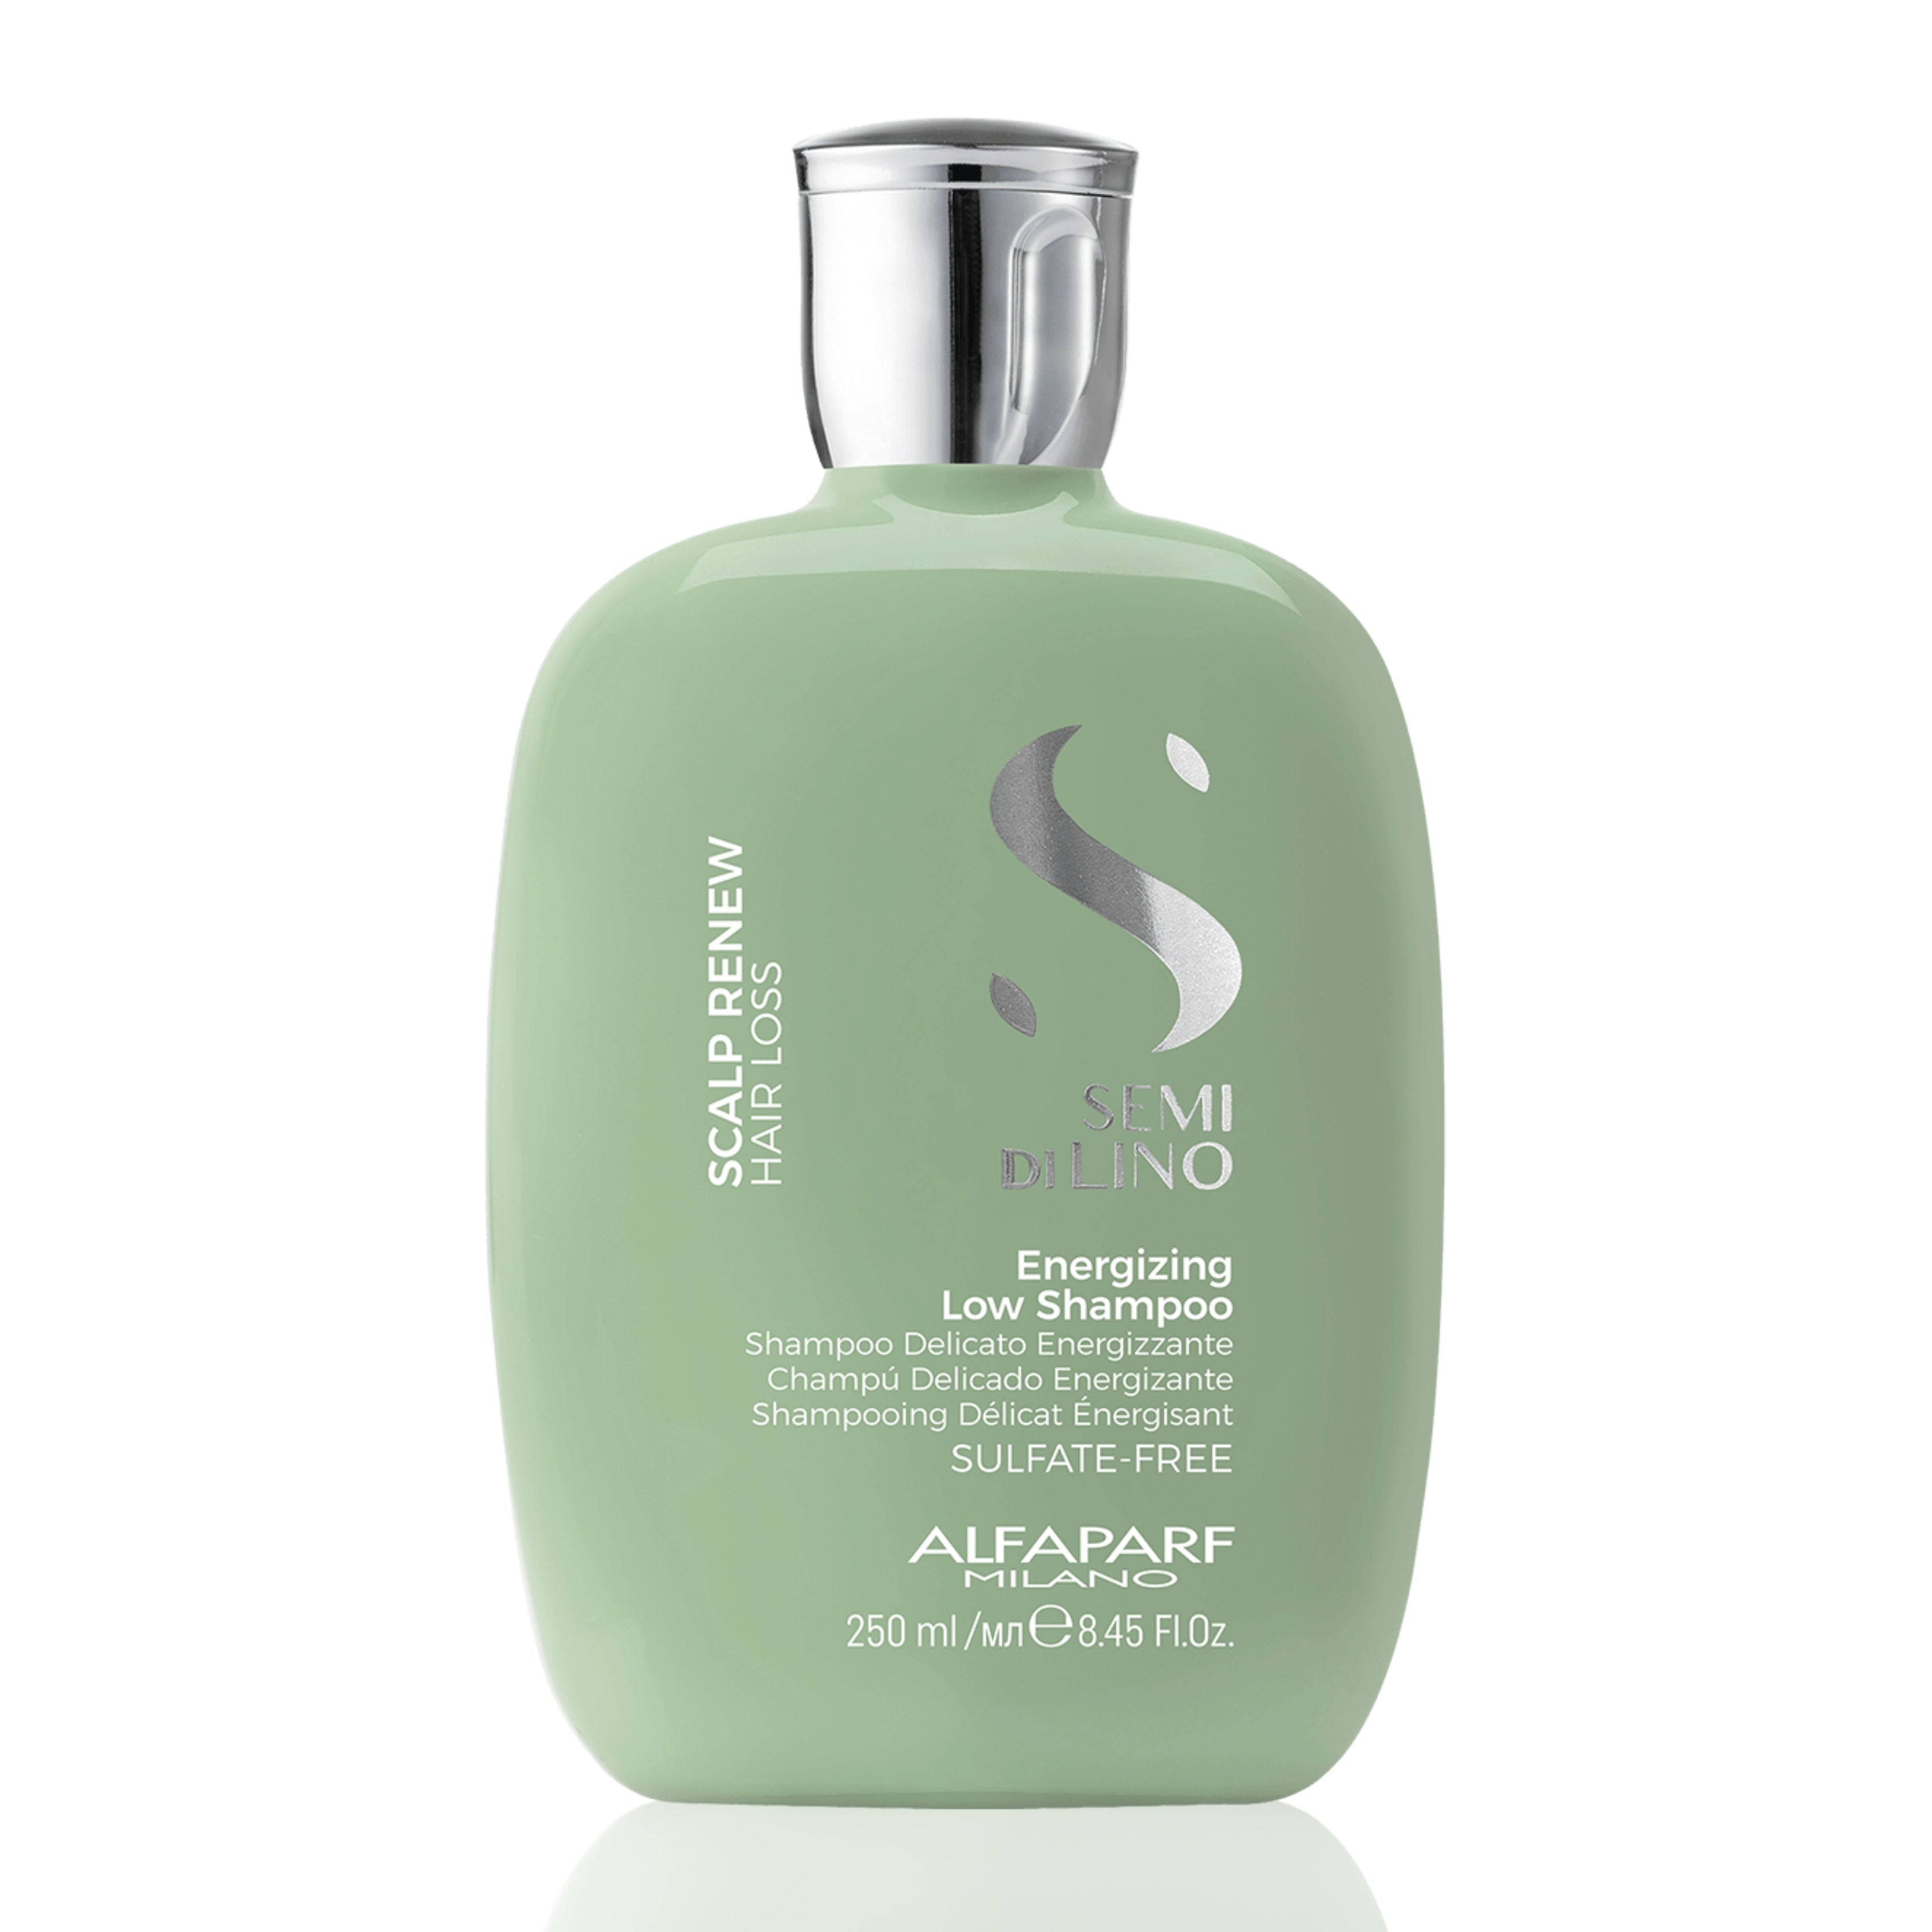 ALFAPARF MILANO SEMI DI LINO Energizing Low Shampoo 250ML